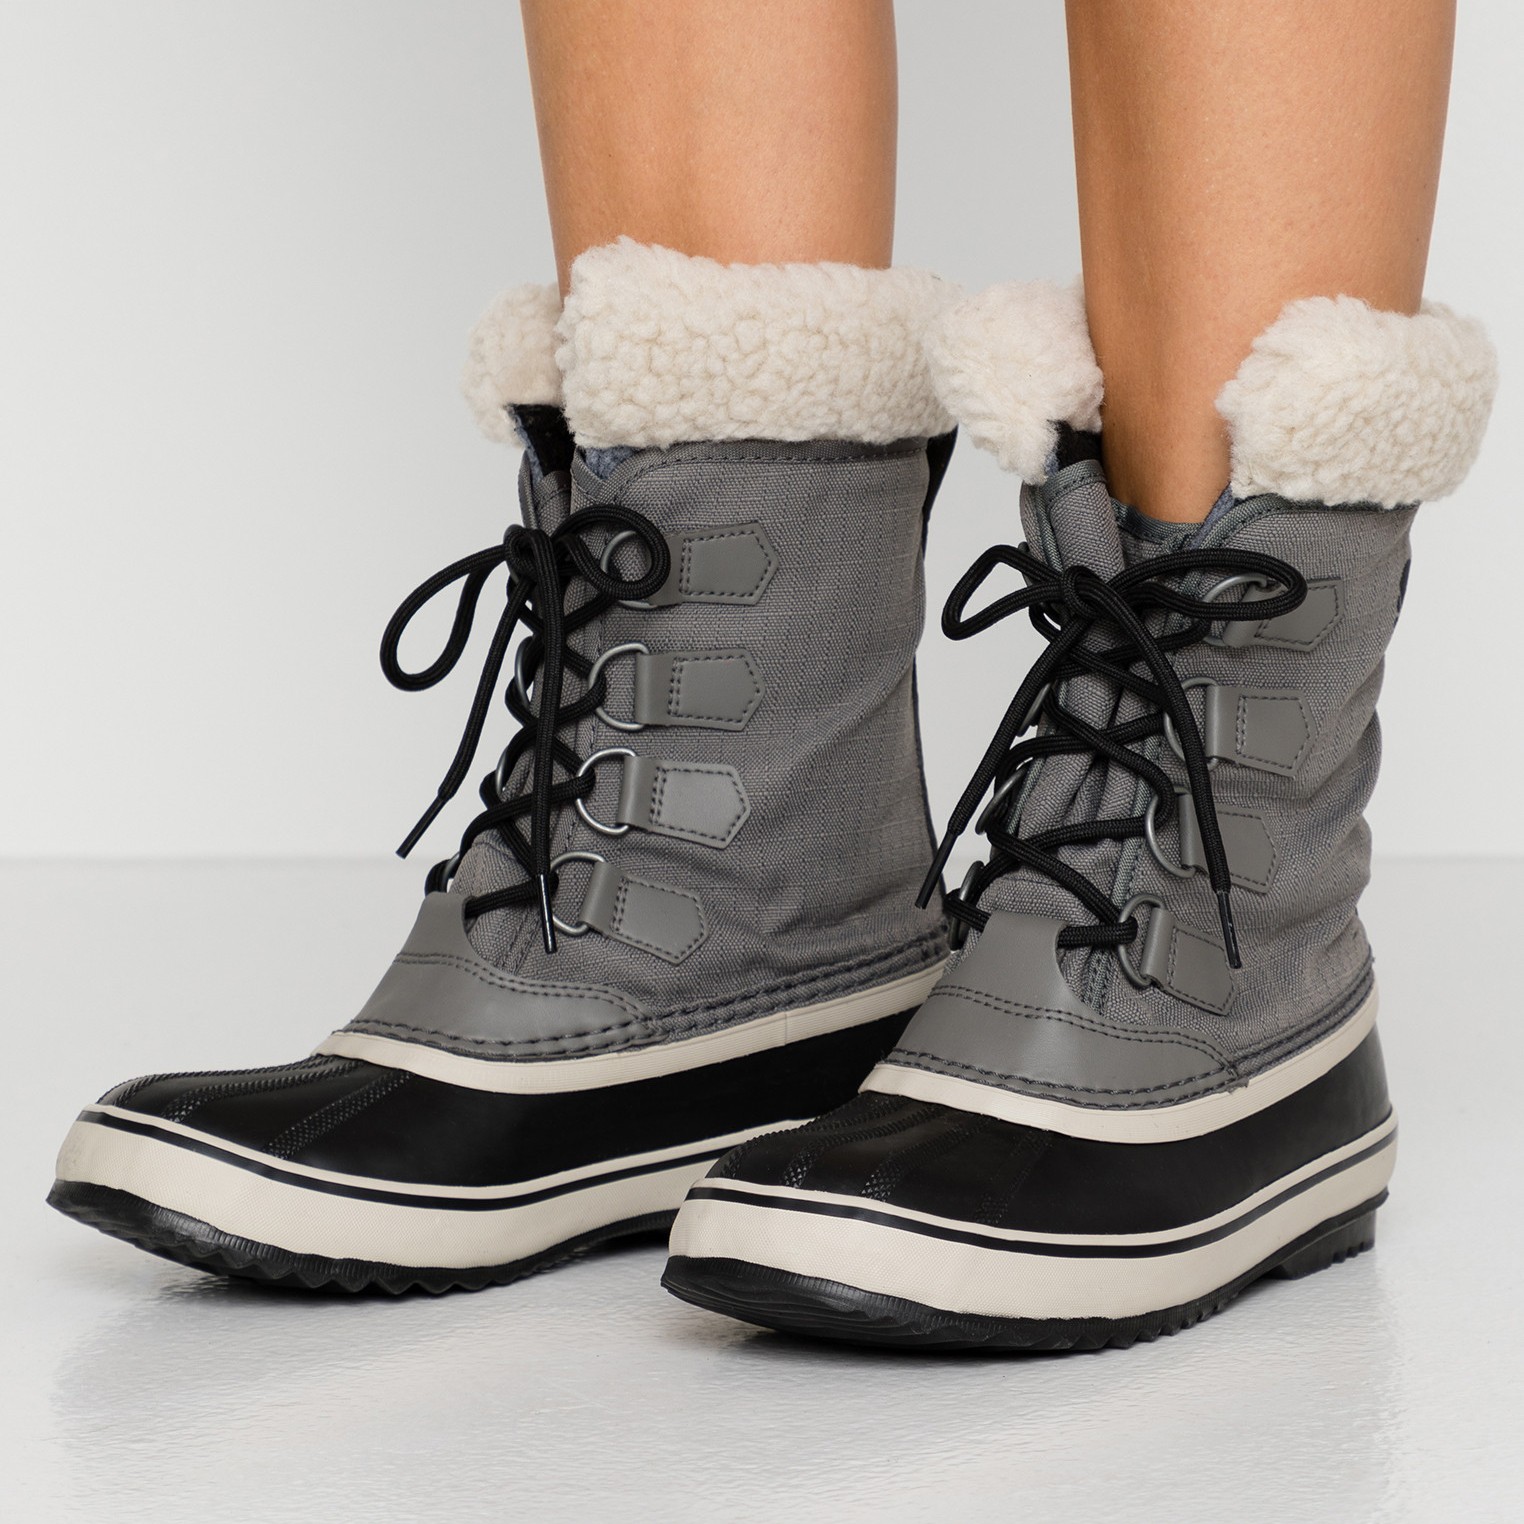 Sorel Winter Carnival Women's Snow Boots